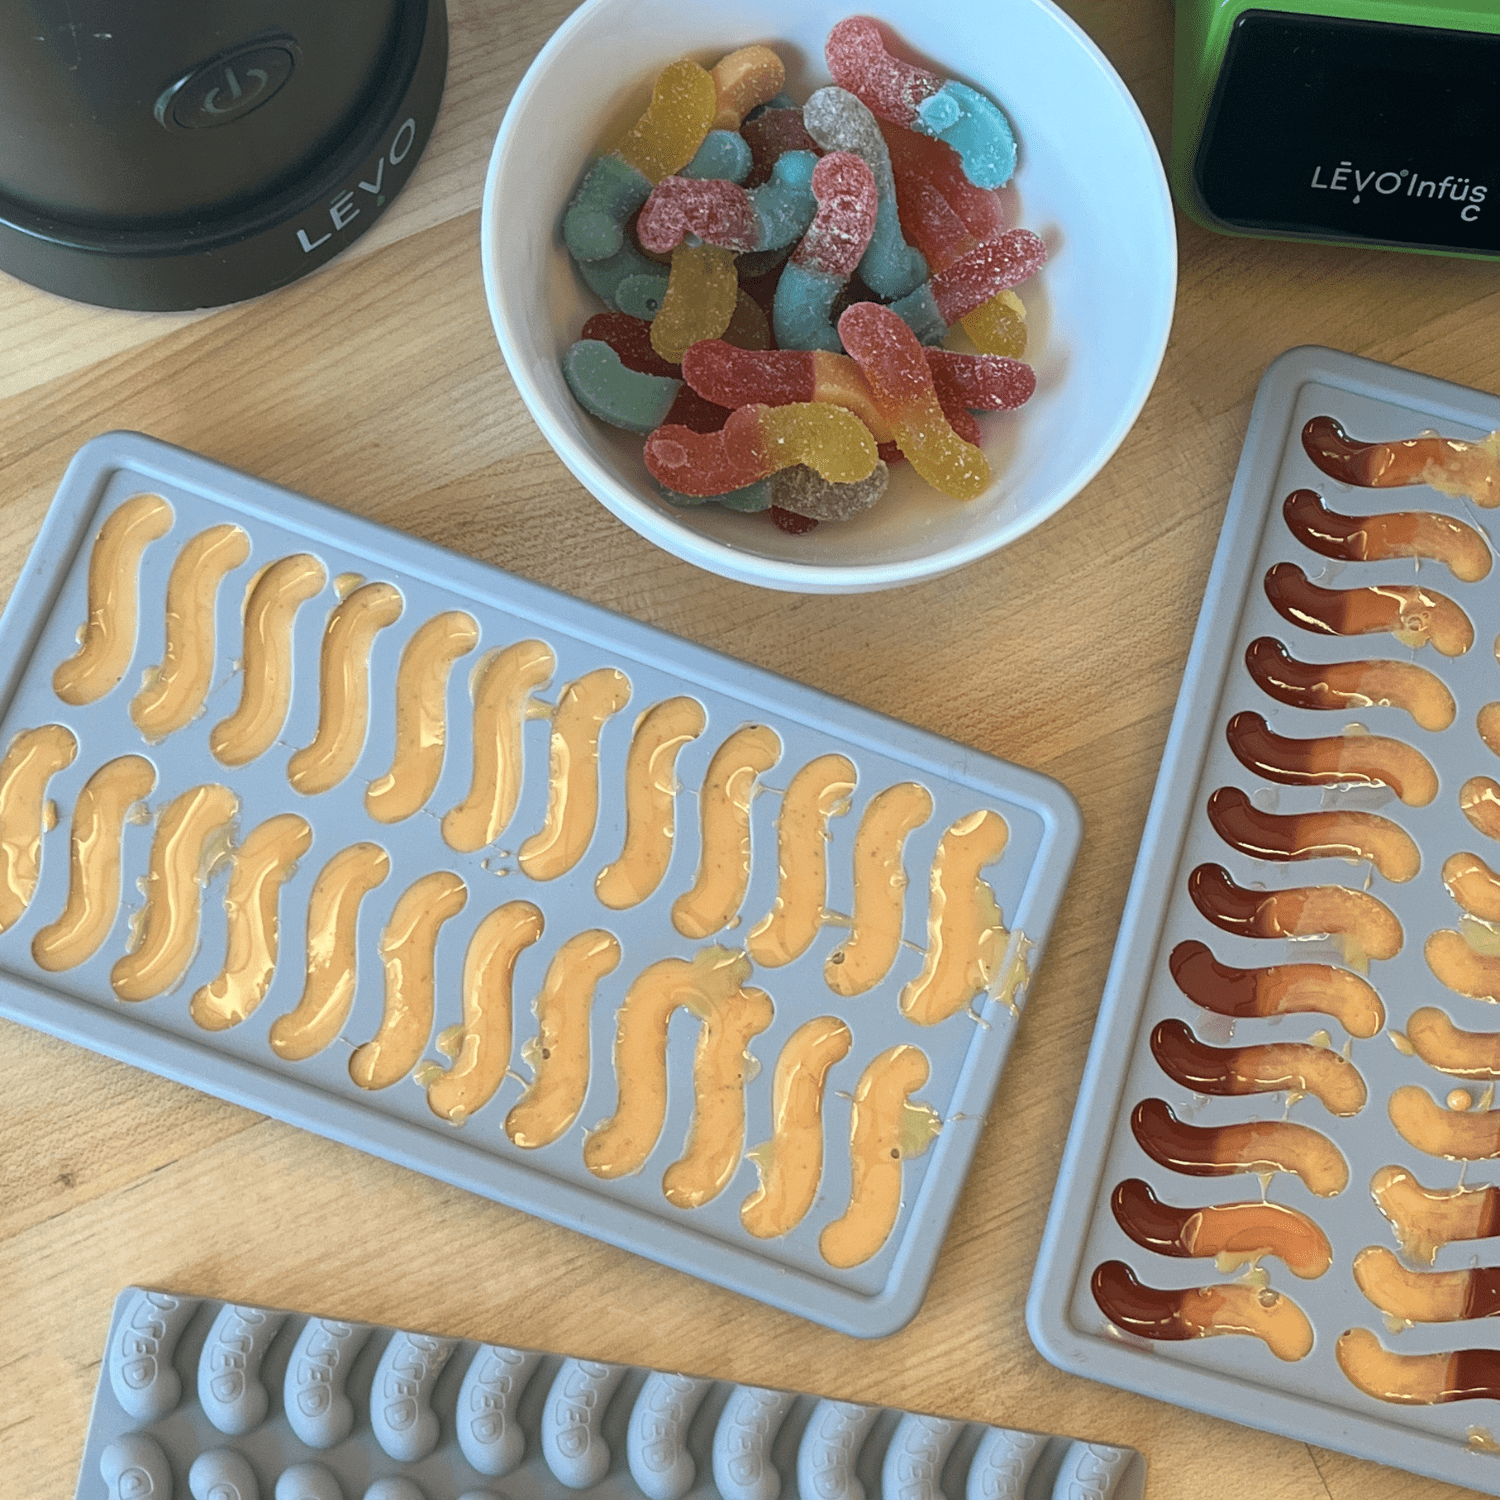 Stir 4 x 9 Silicone Gummy Worm Candy Mold - Molds - Baking & Kitchen